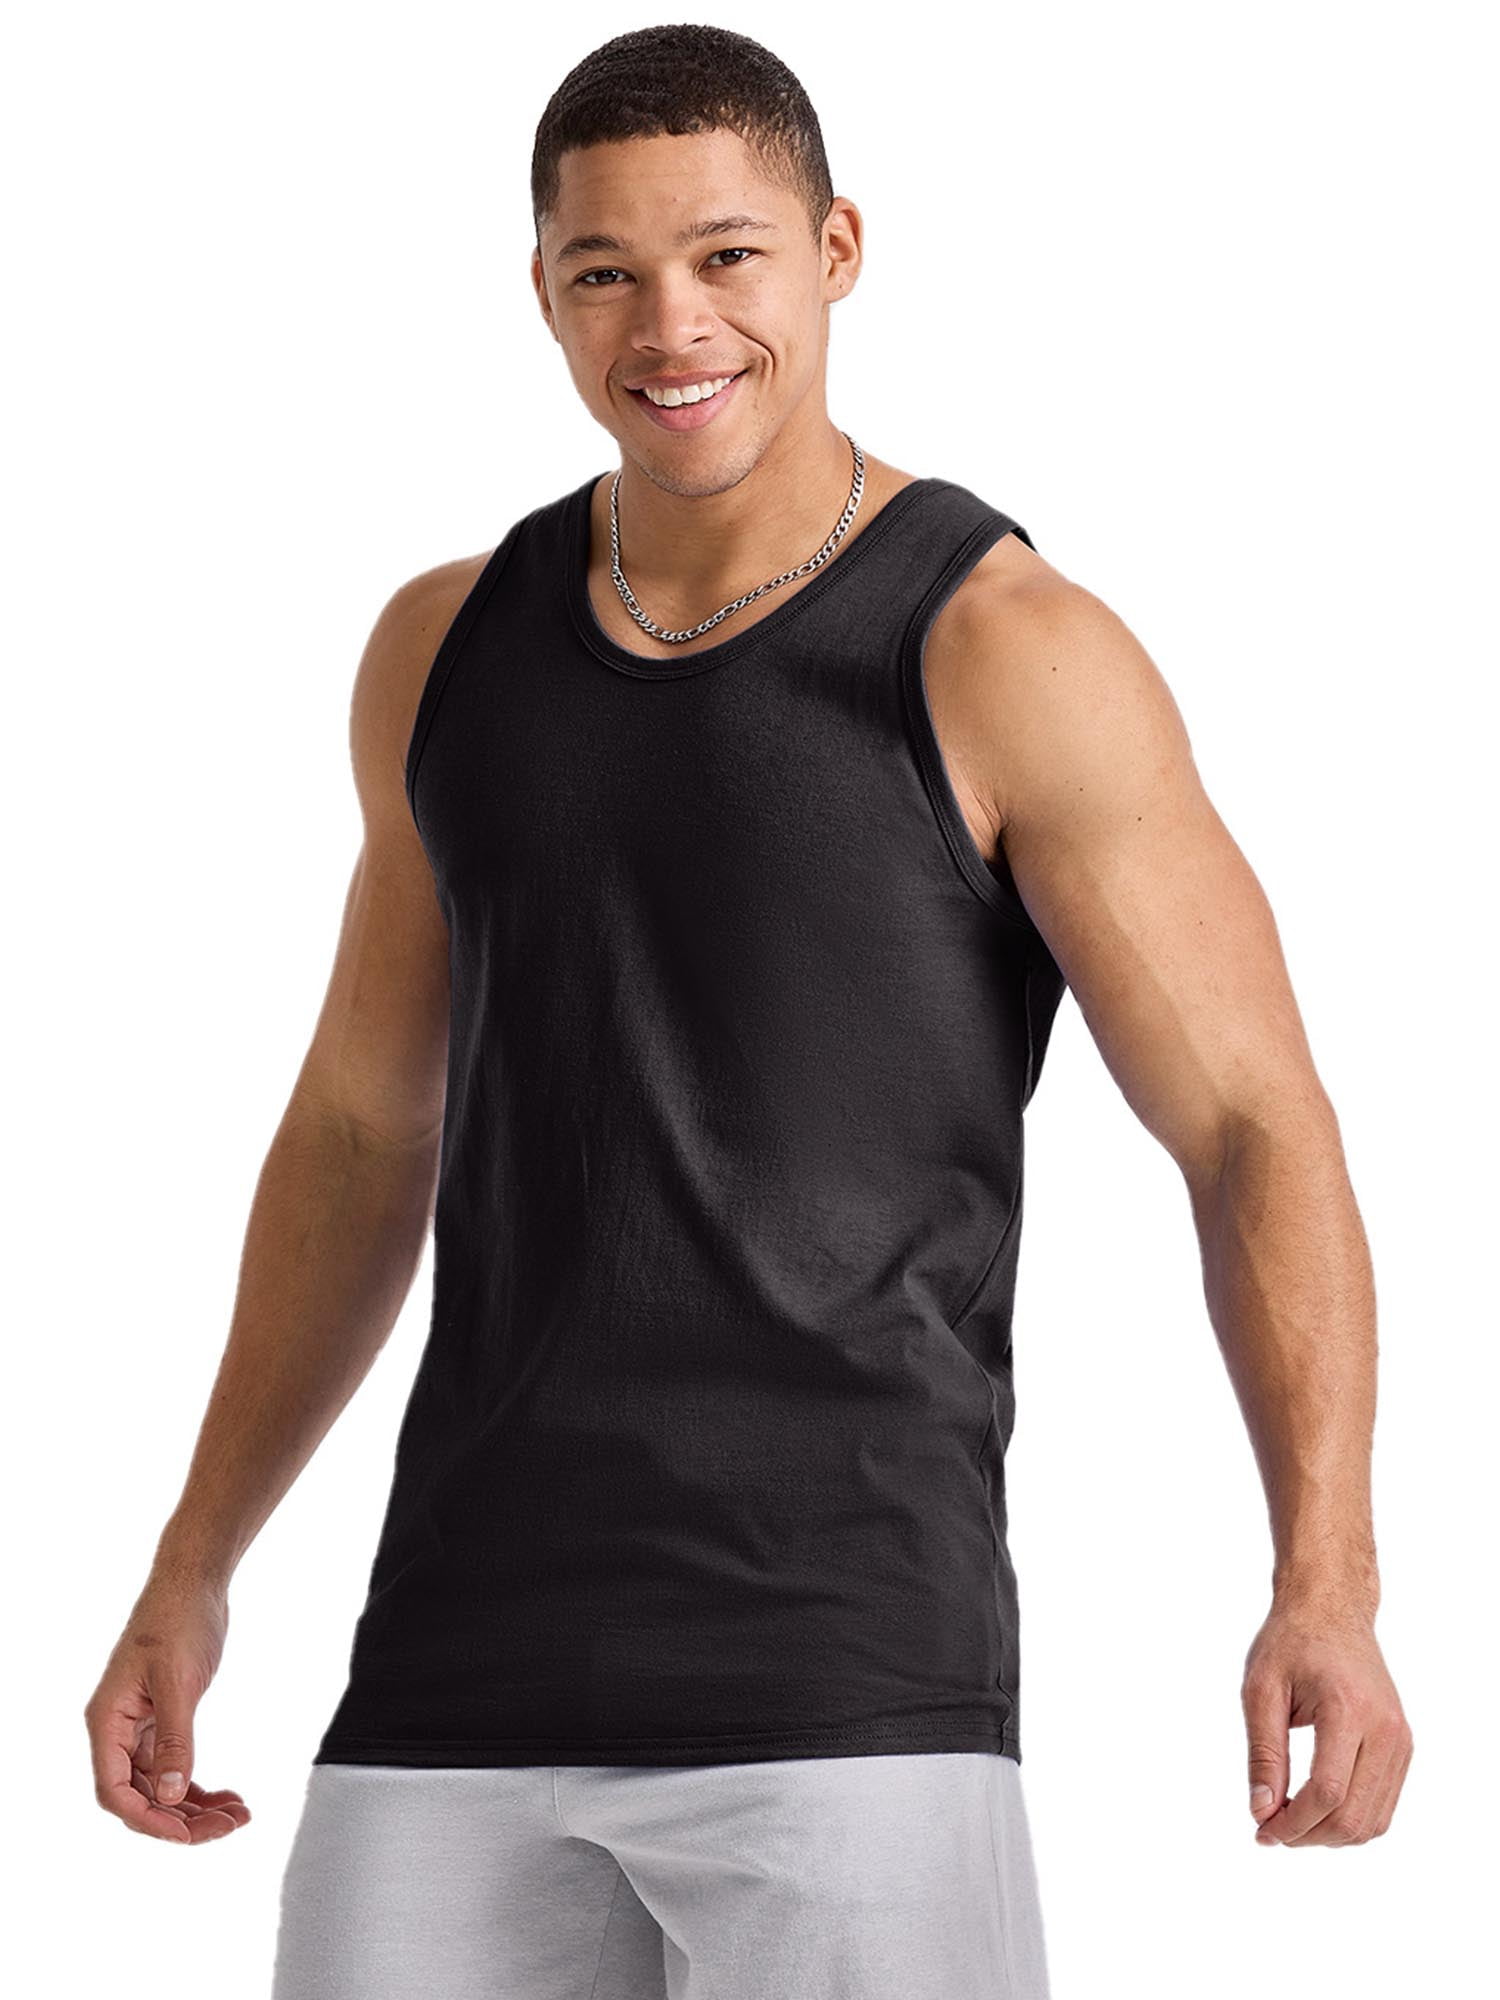 Big Kids (XS - XL) Black Tank Tops & Sleeveless Shirts.